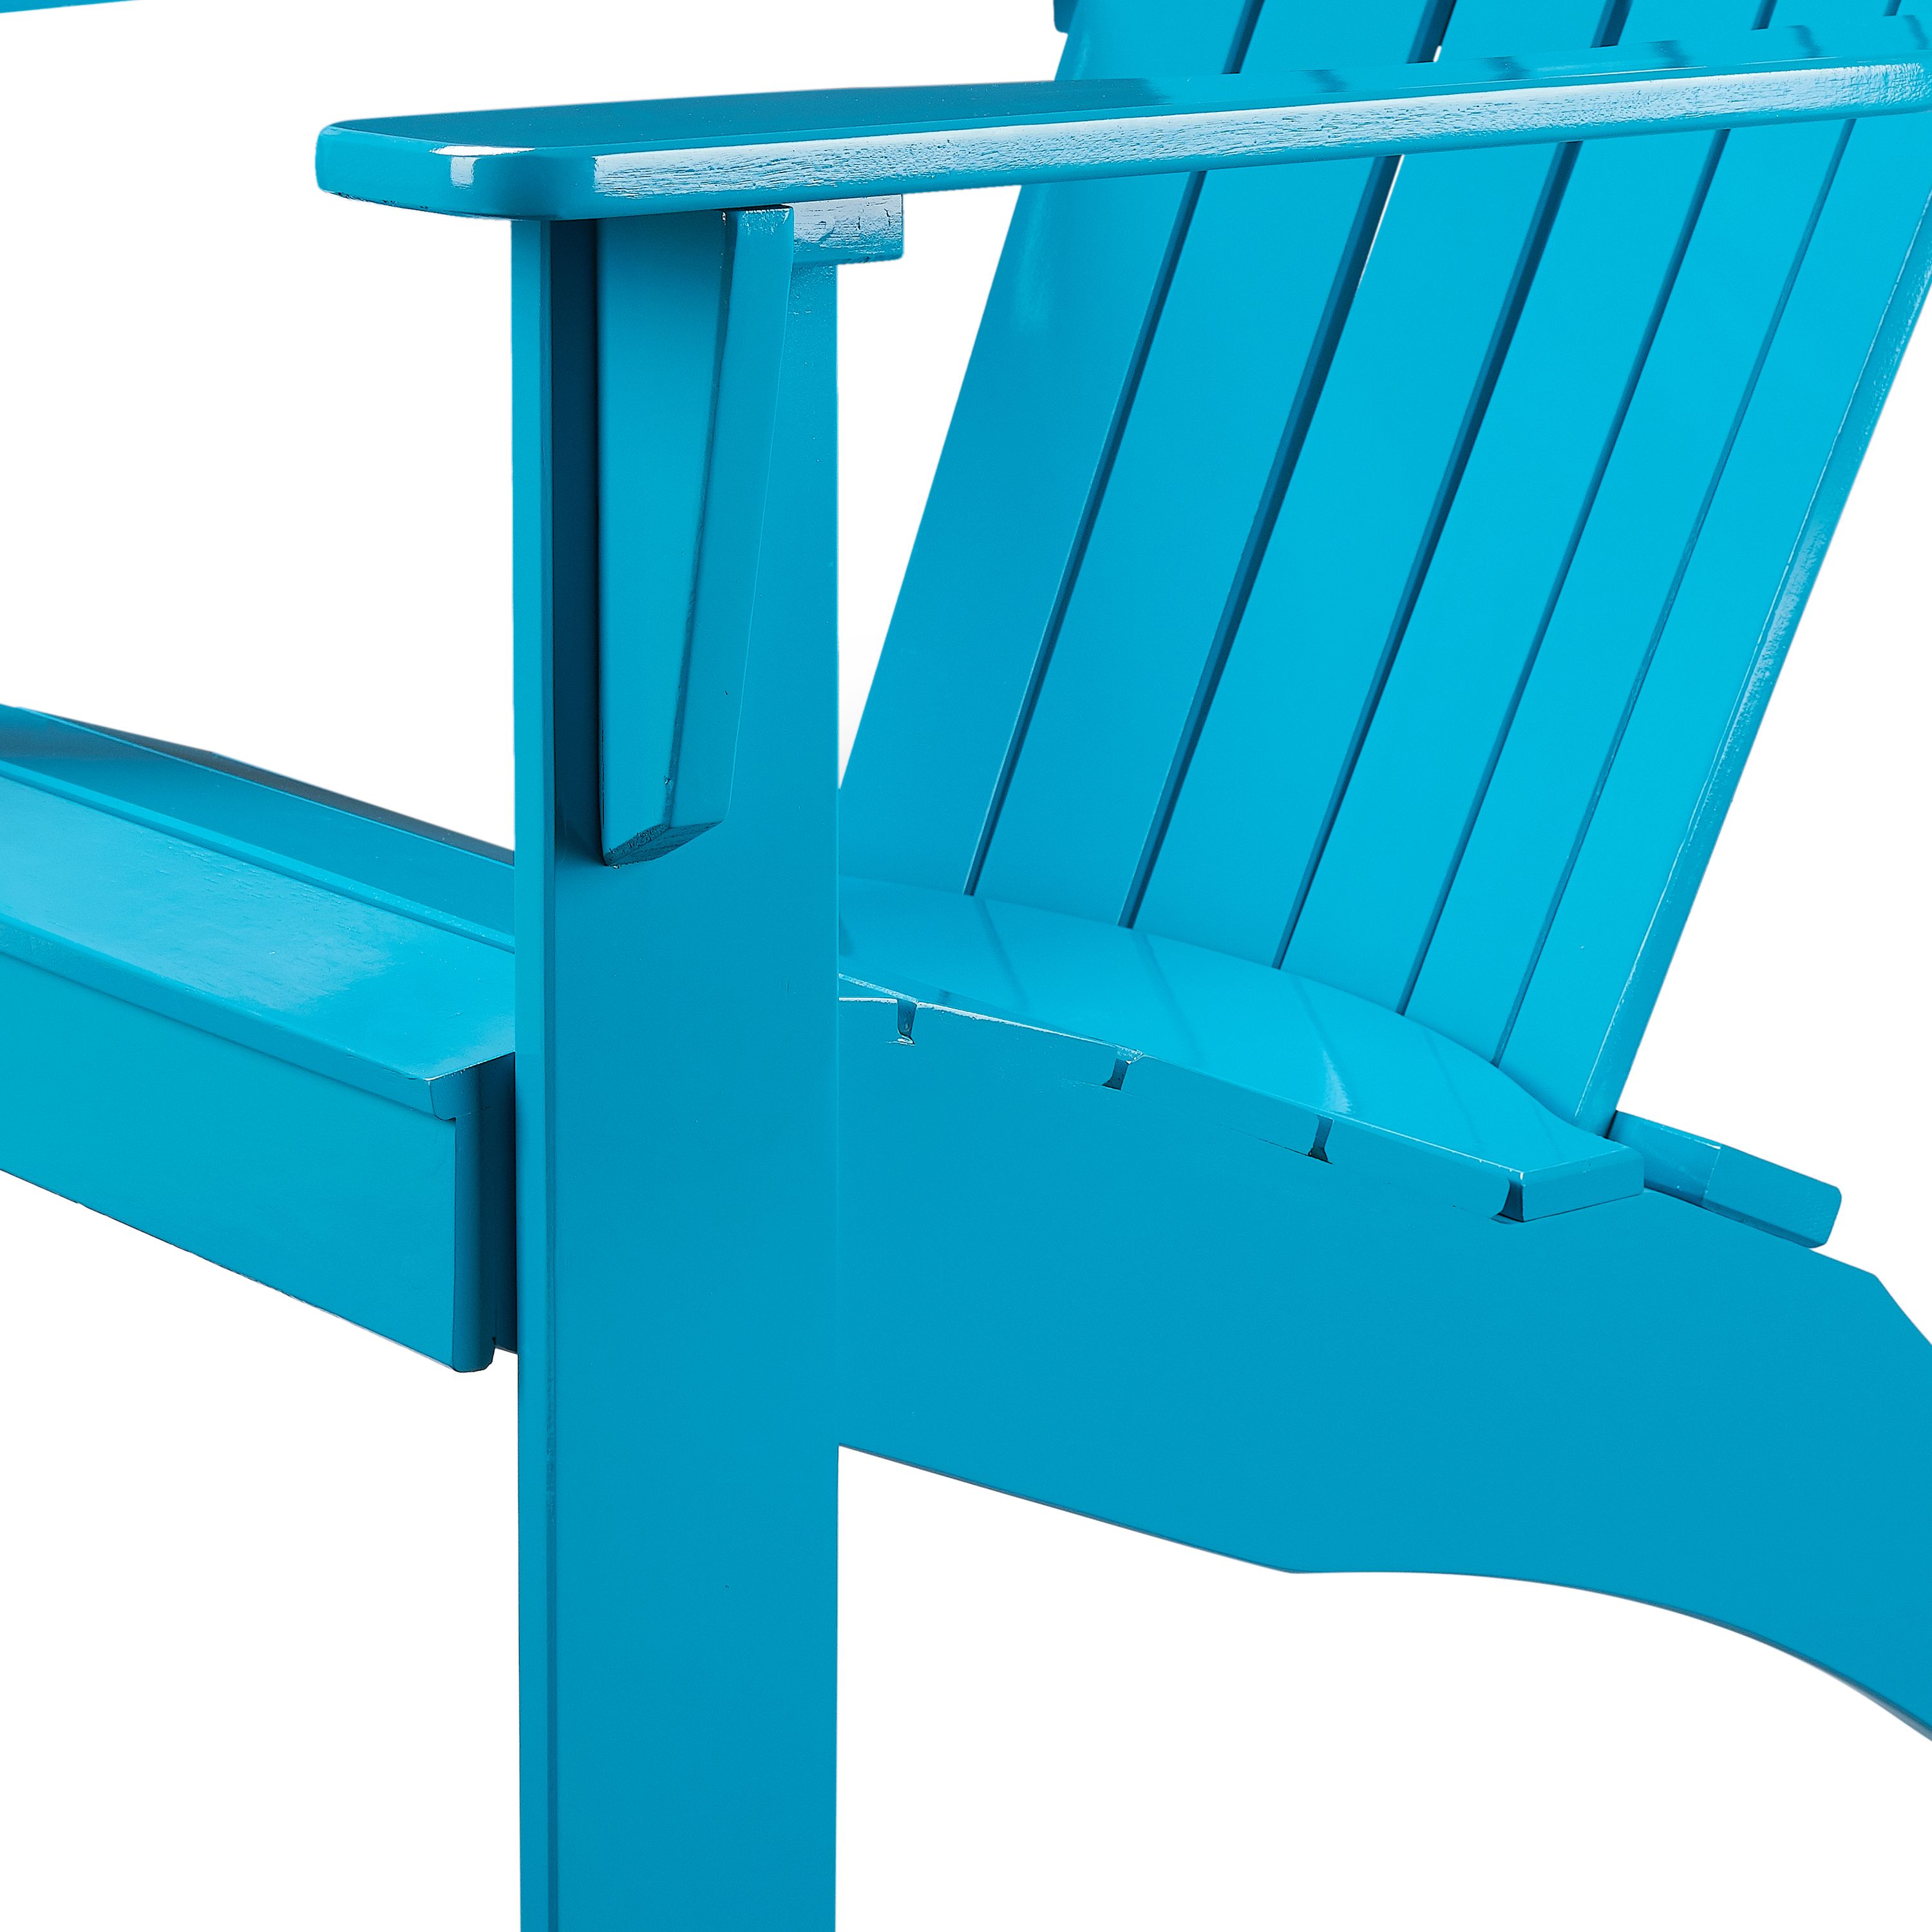 Mainstays Rubberwood Adirondack Chair - Turquoise - image 4 of 8